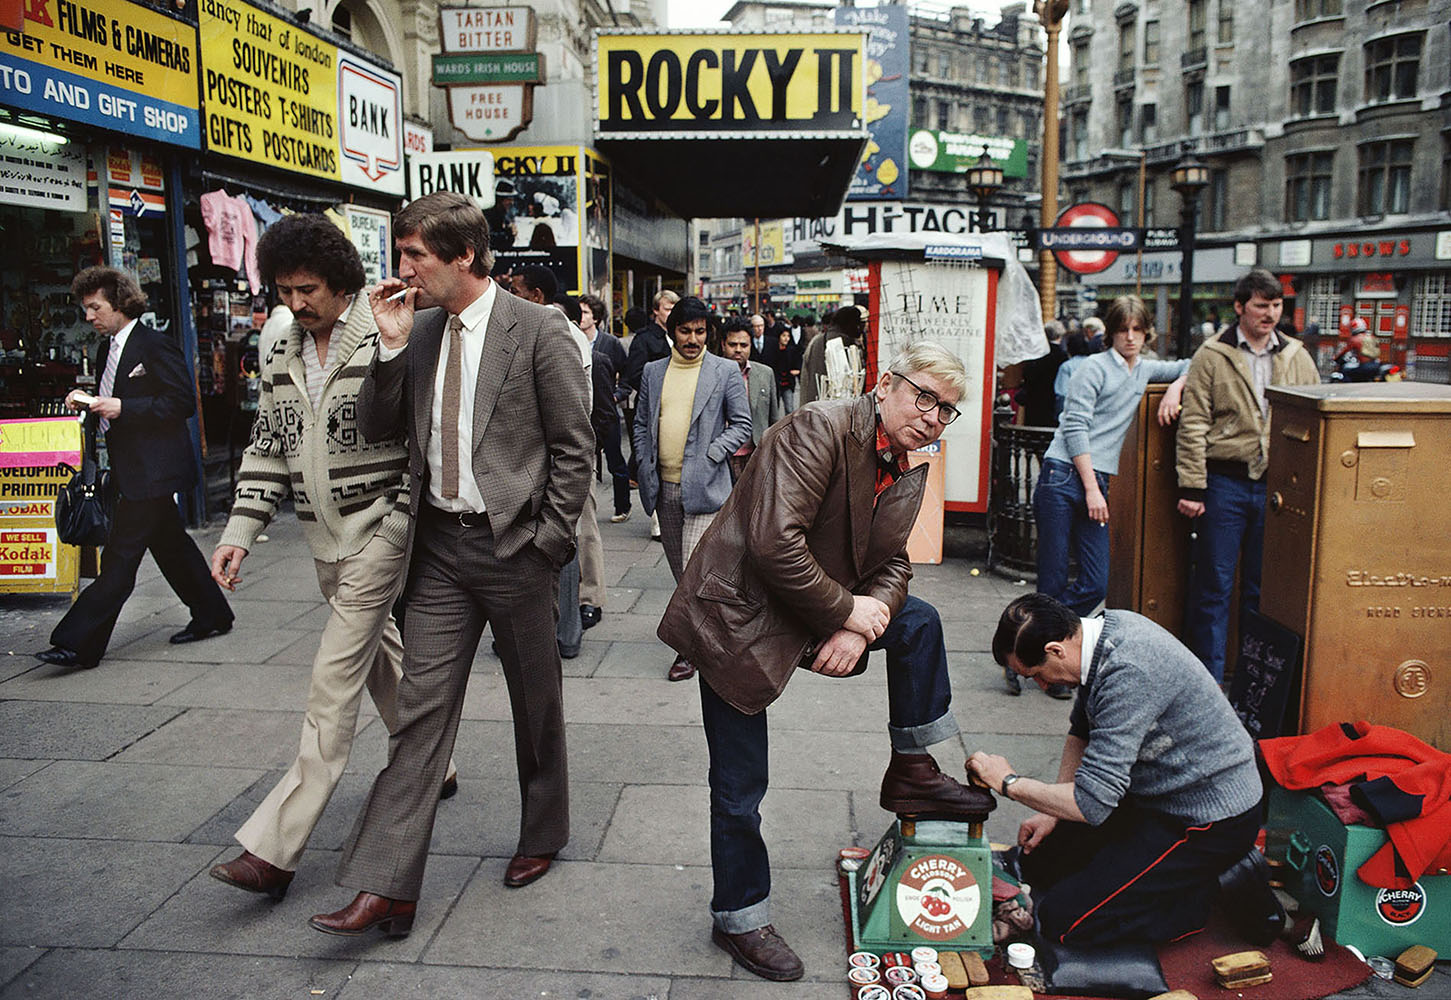 William Klein "Shoes polisher, Rocky II, etc, Piccadilly, 1980" © William Klein Courtesy of the artist